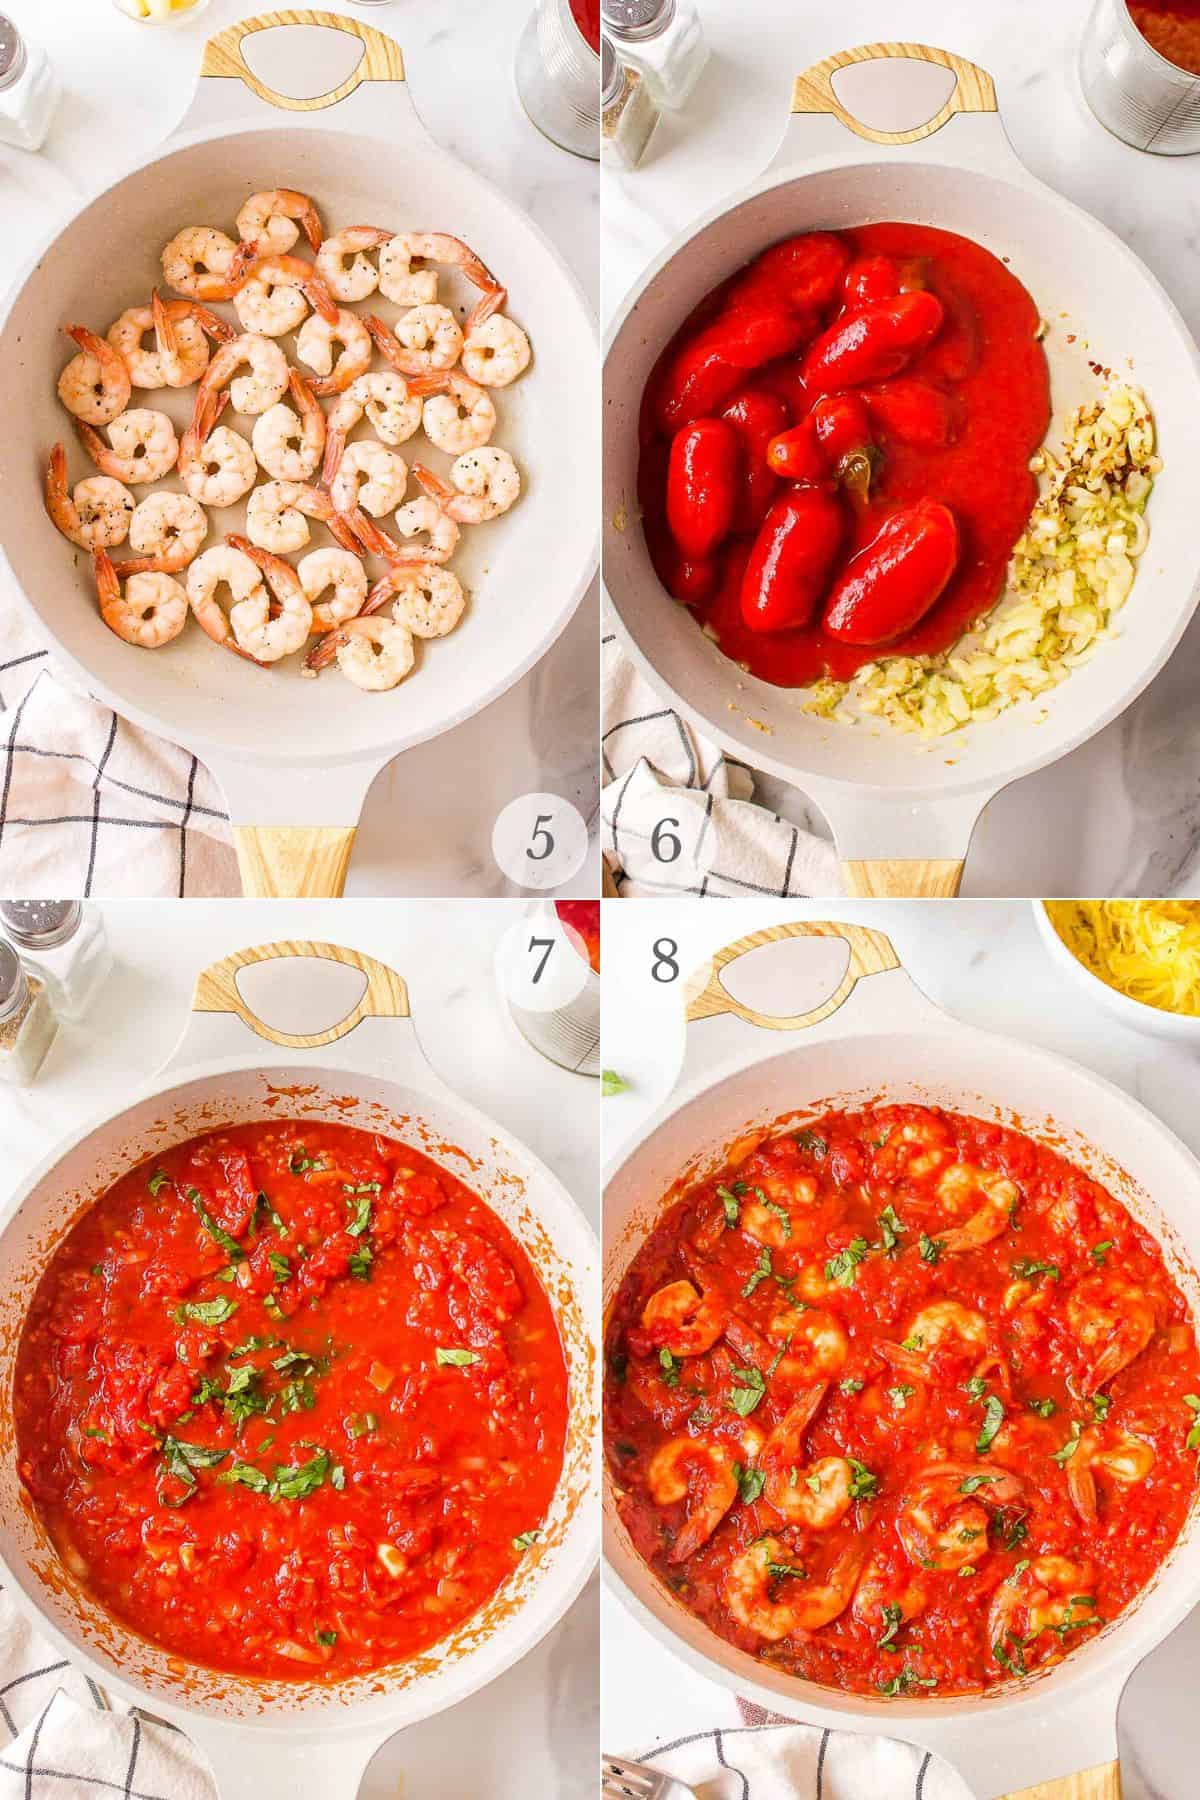 spicy shrimp spaghetti squash recipe steps 5-8.